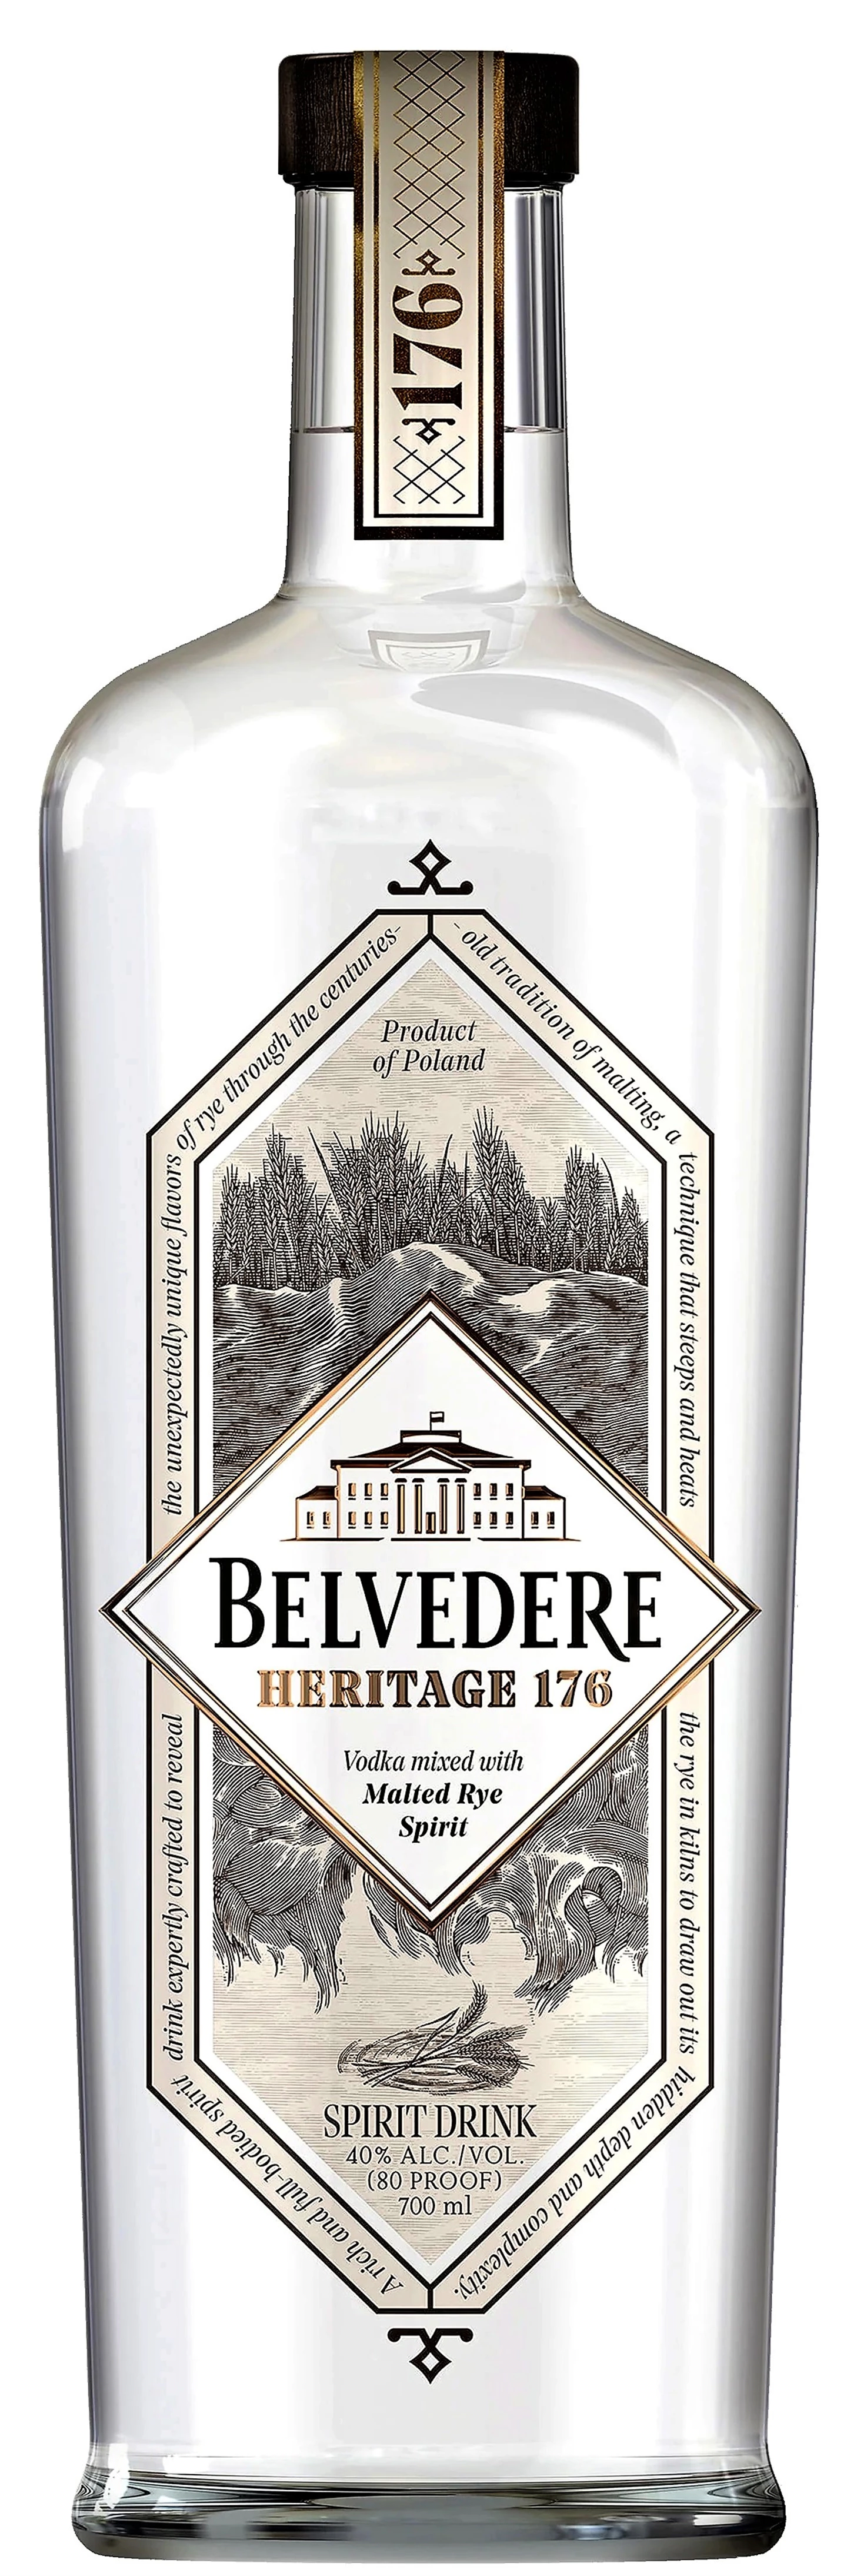 Polmos Zyrardow Vodka Belvedere Heritage 176